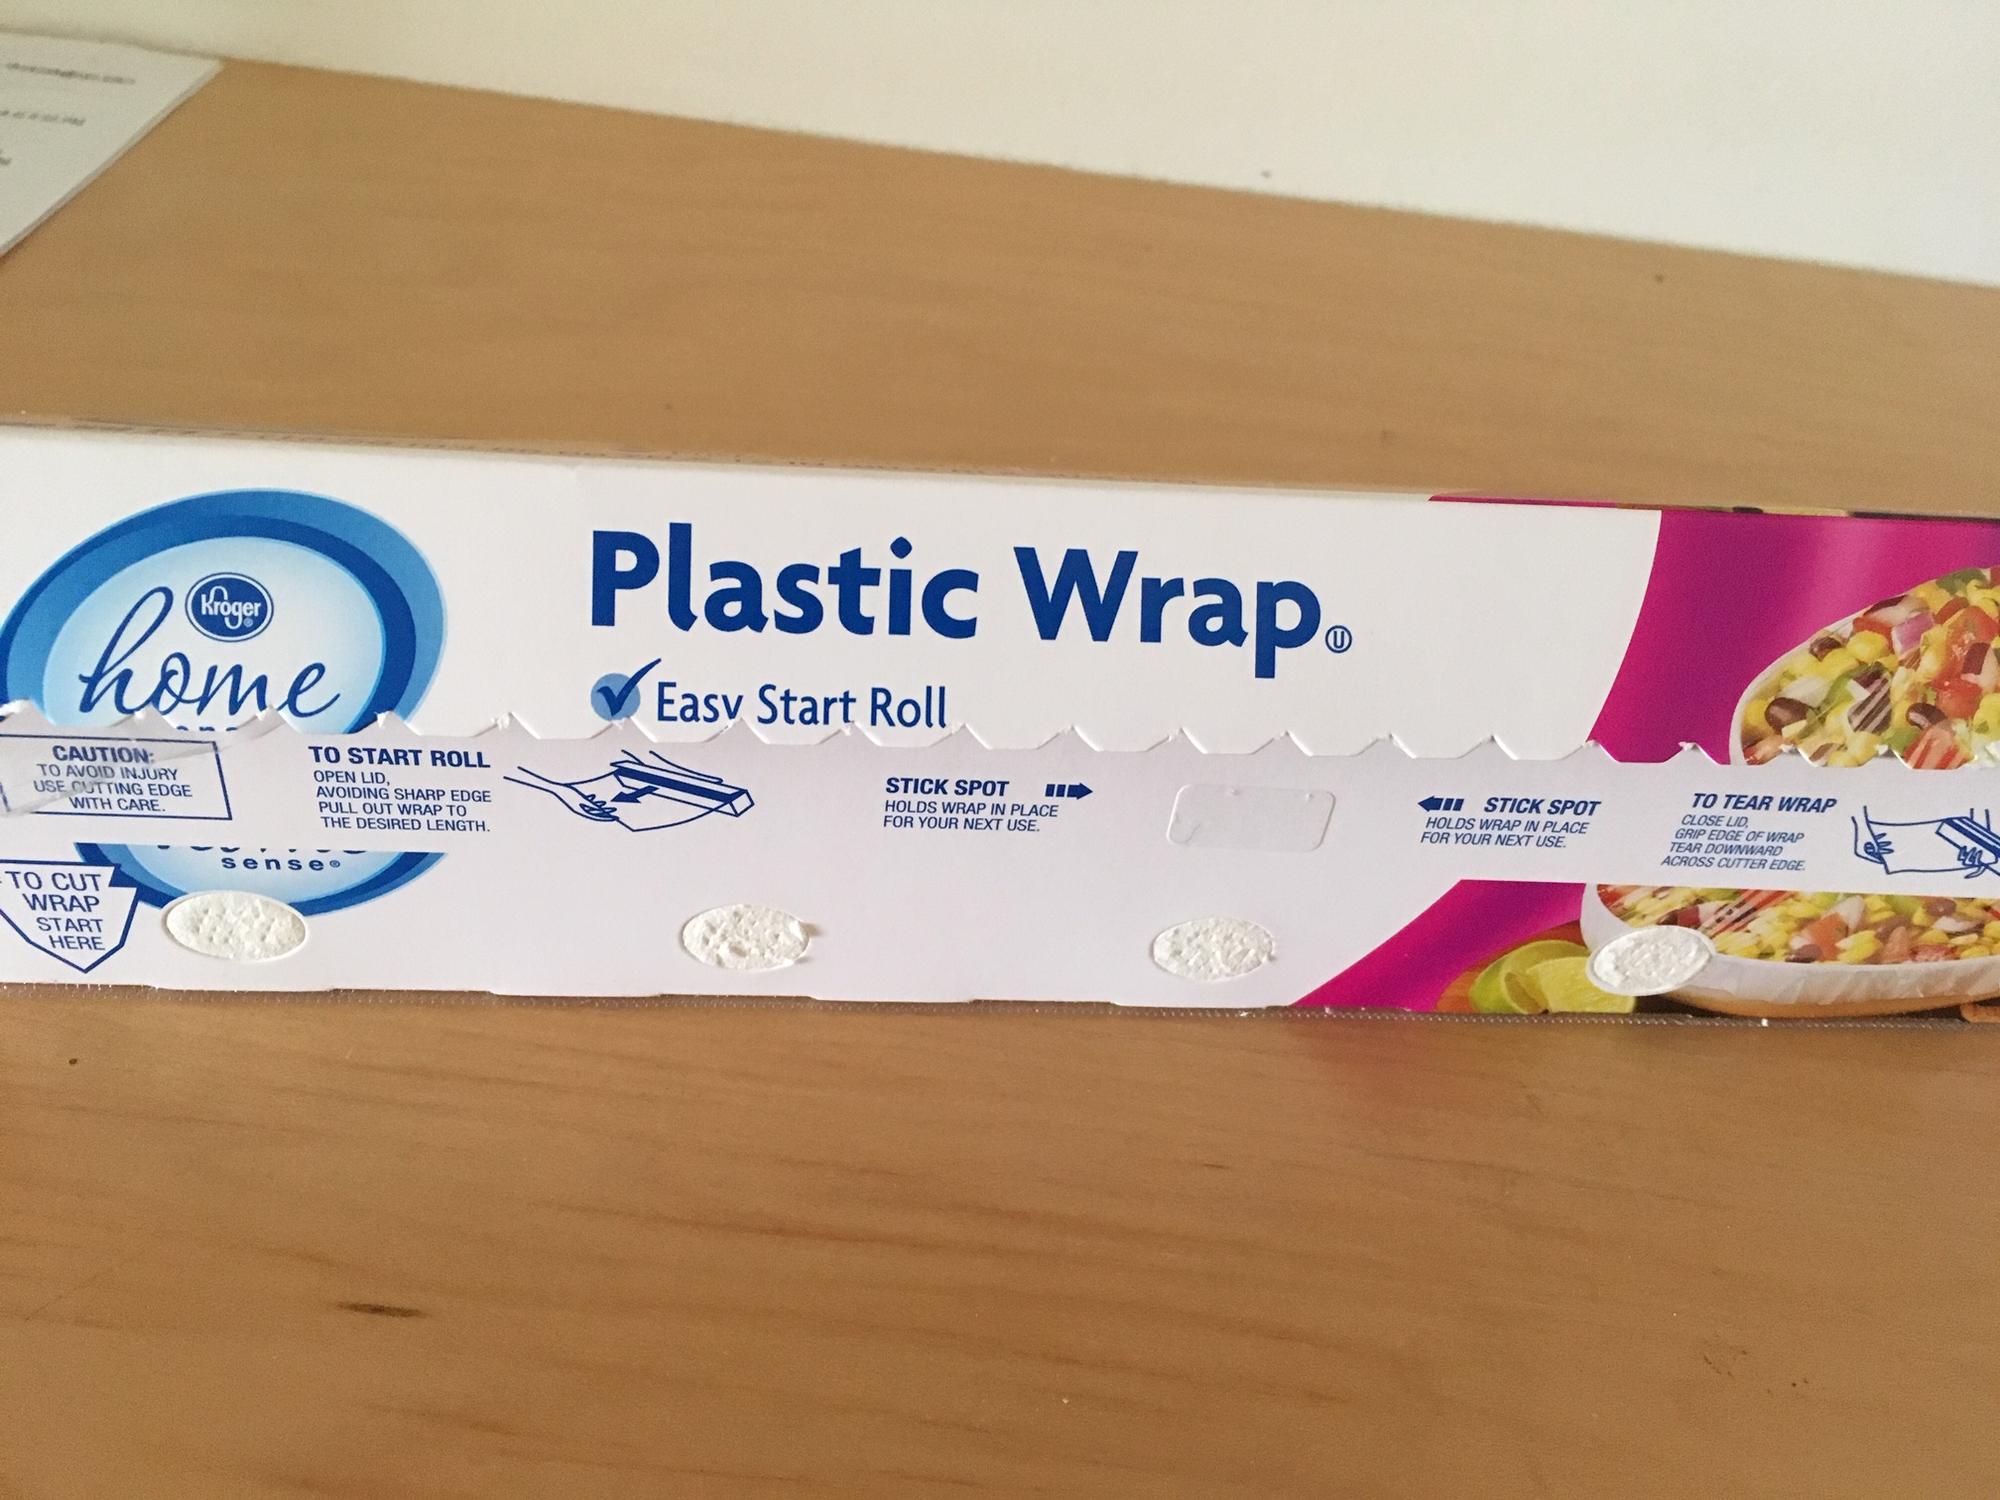 Plastic wrap box design: sliding cutters - Kitchen Consumer - eGullet Forums